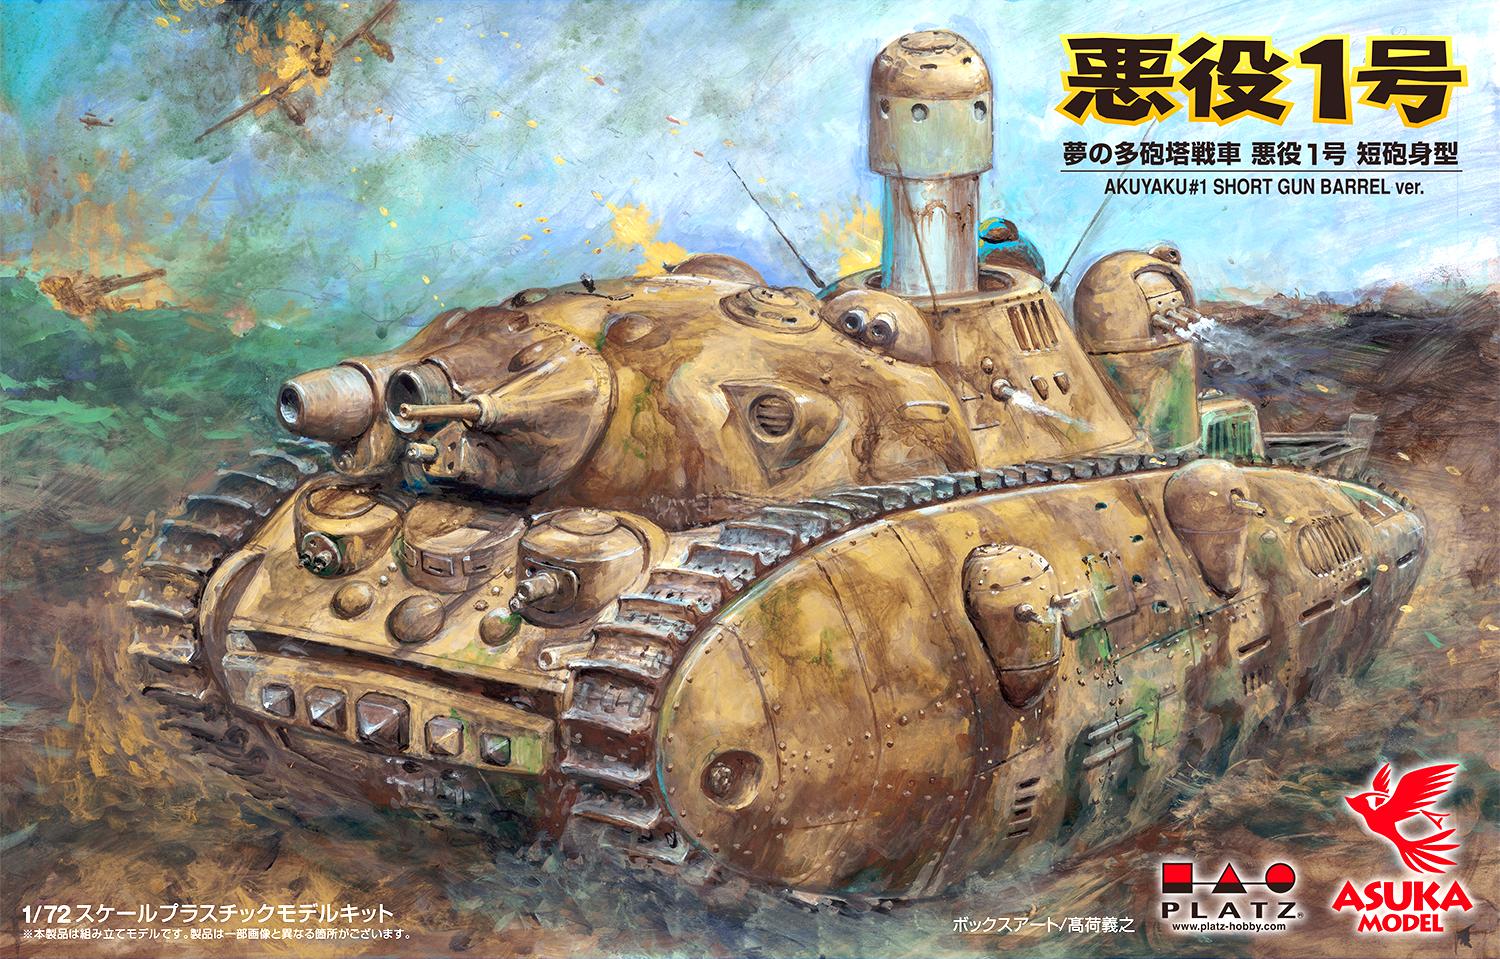 Turbulentie Specialiteit Zin Multi-turreted Tank Akuyaku #1 Short Gun Barrel ver. Reviews | HobbyLink  Japan Reviews | Feefo